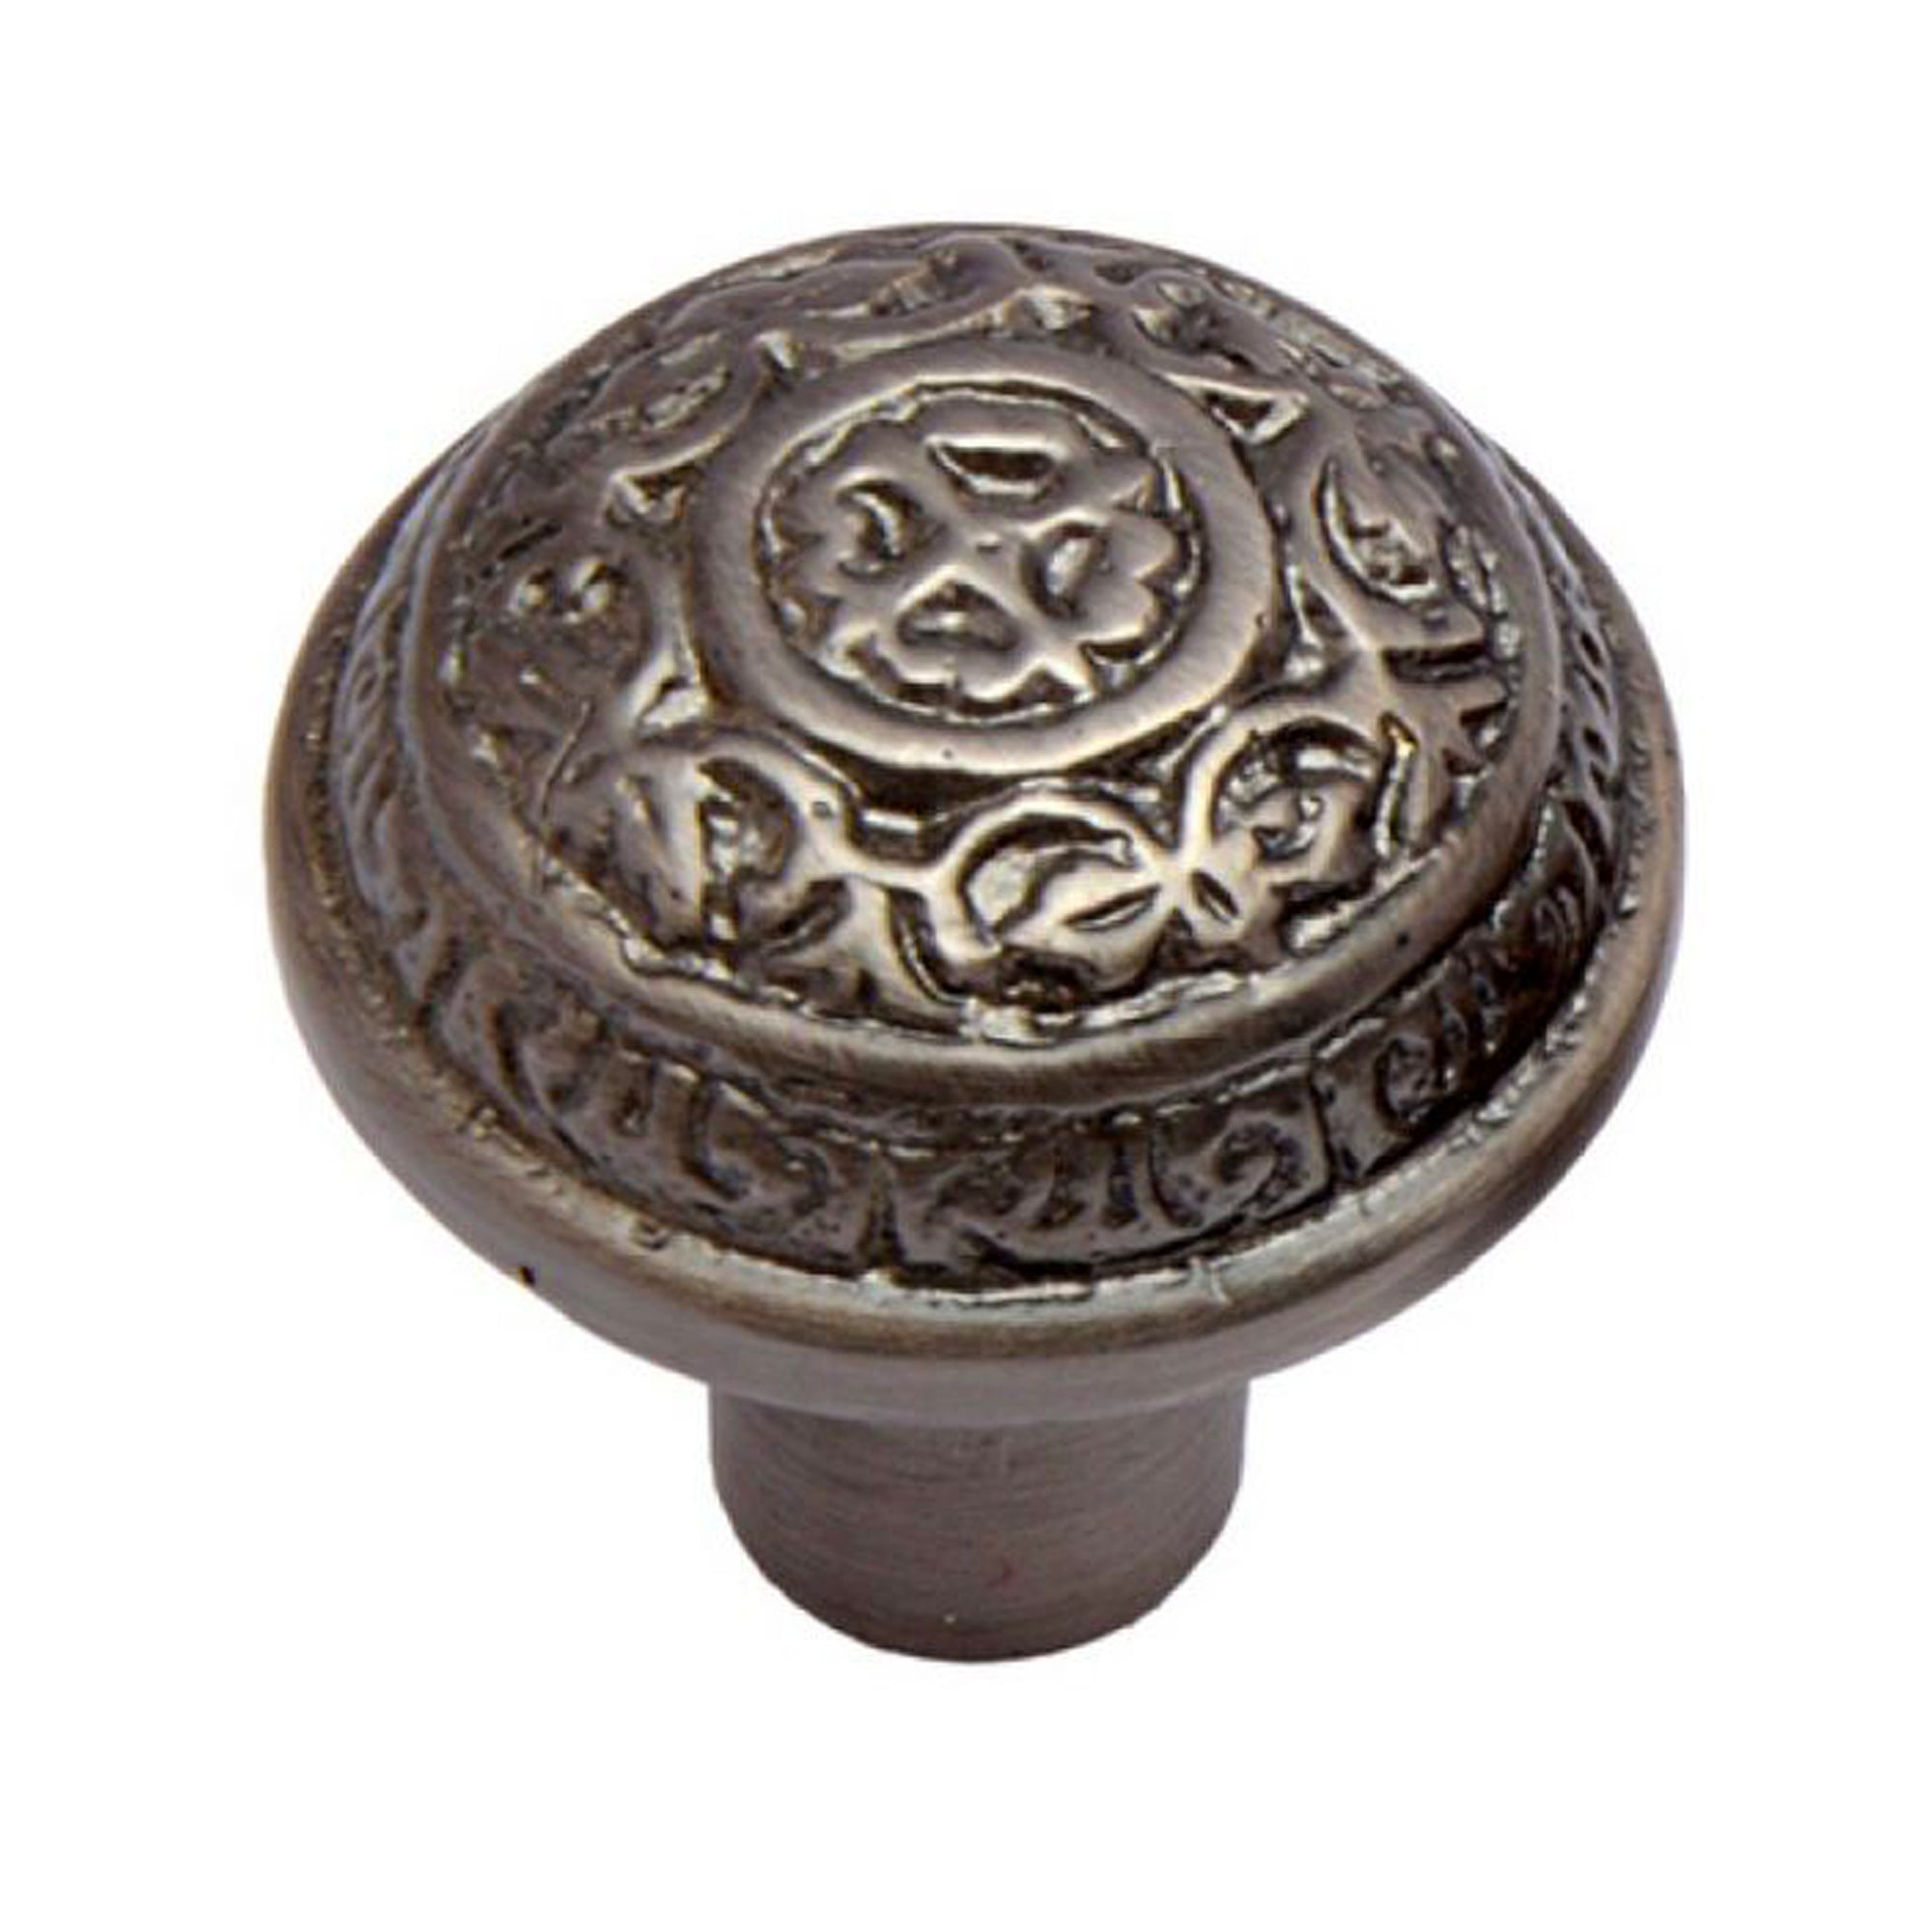 Brass Cabinet Knob - Antique Brushed Nickel